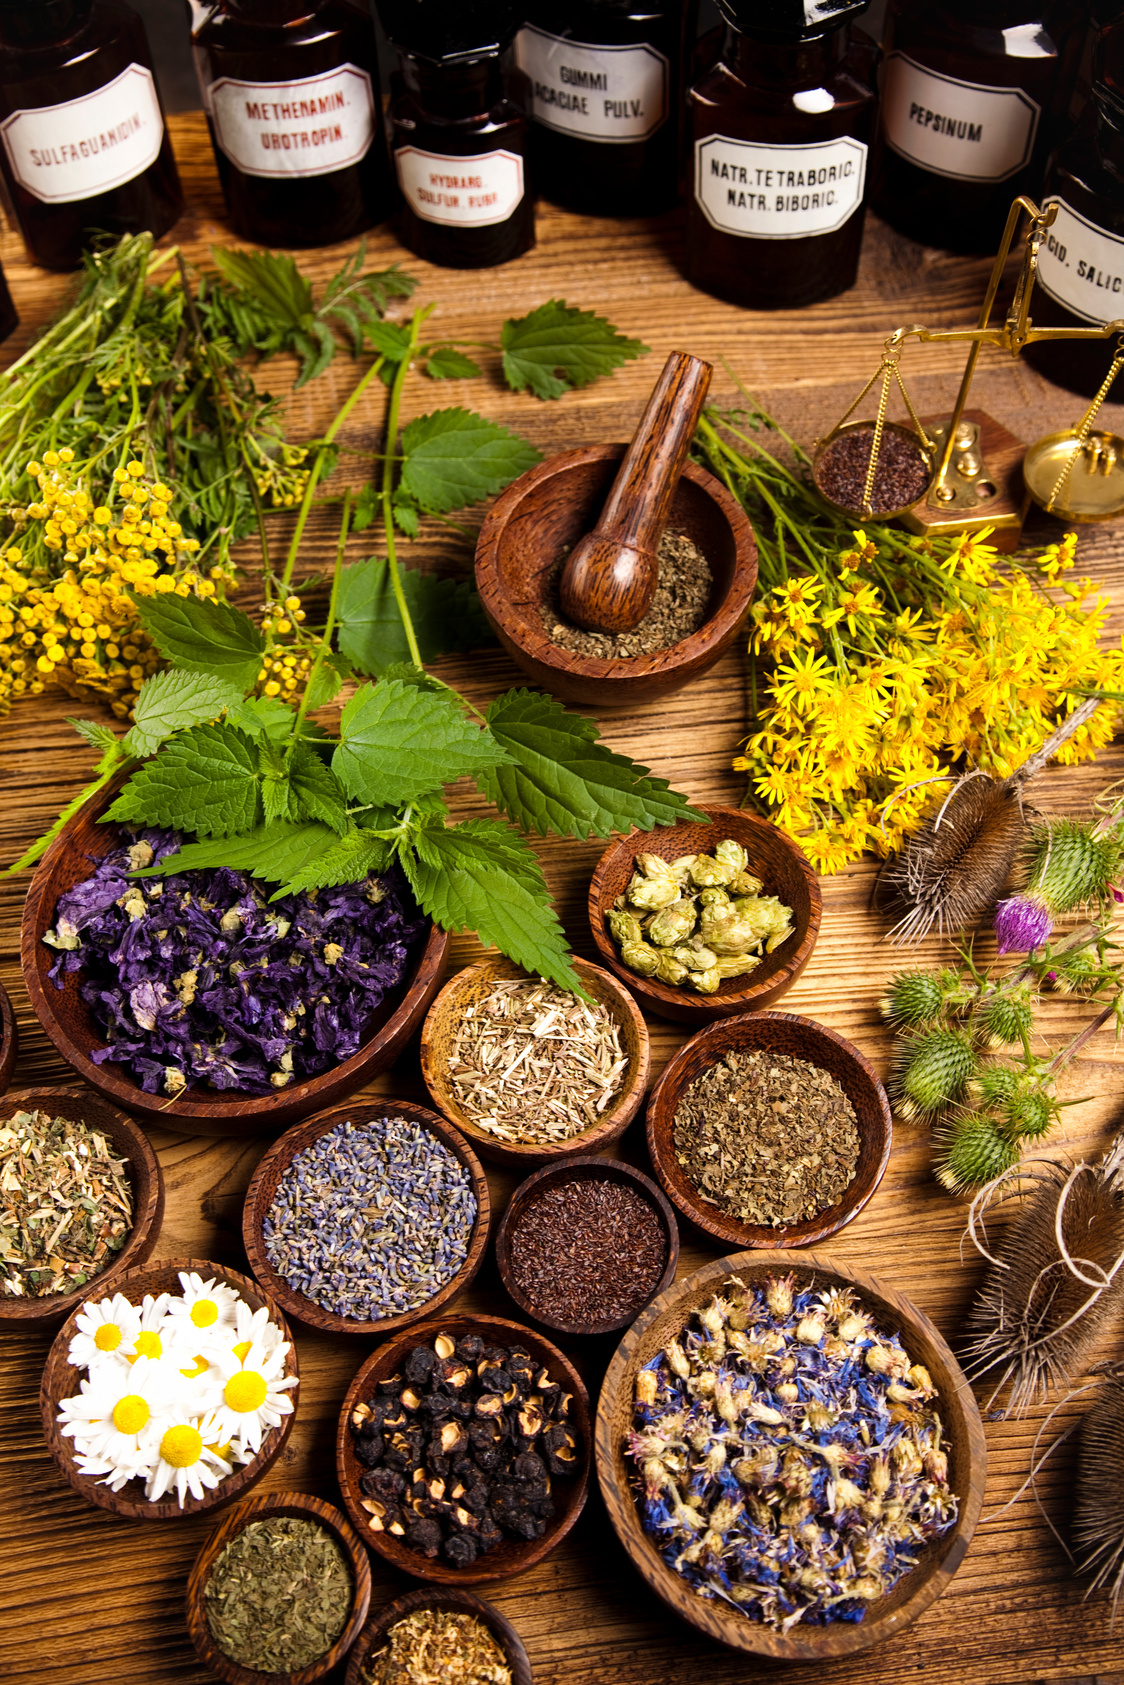 Herbal medicine